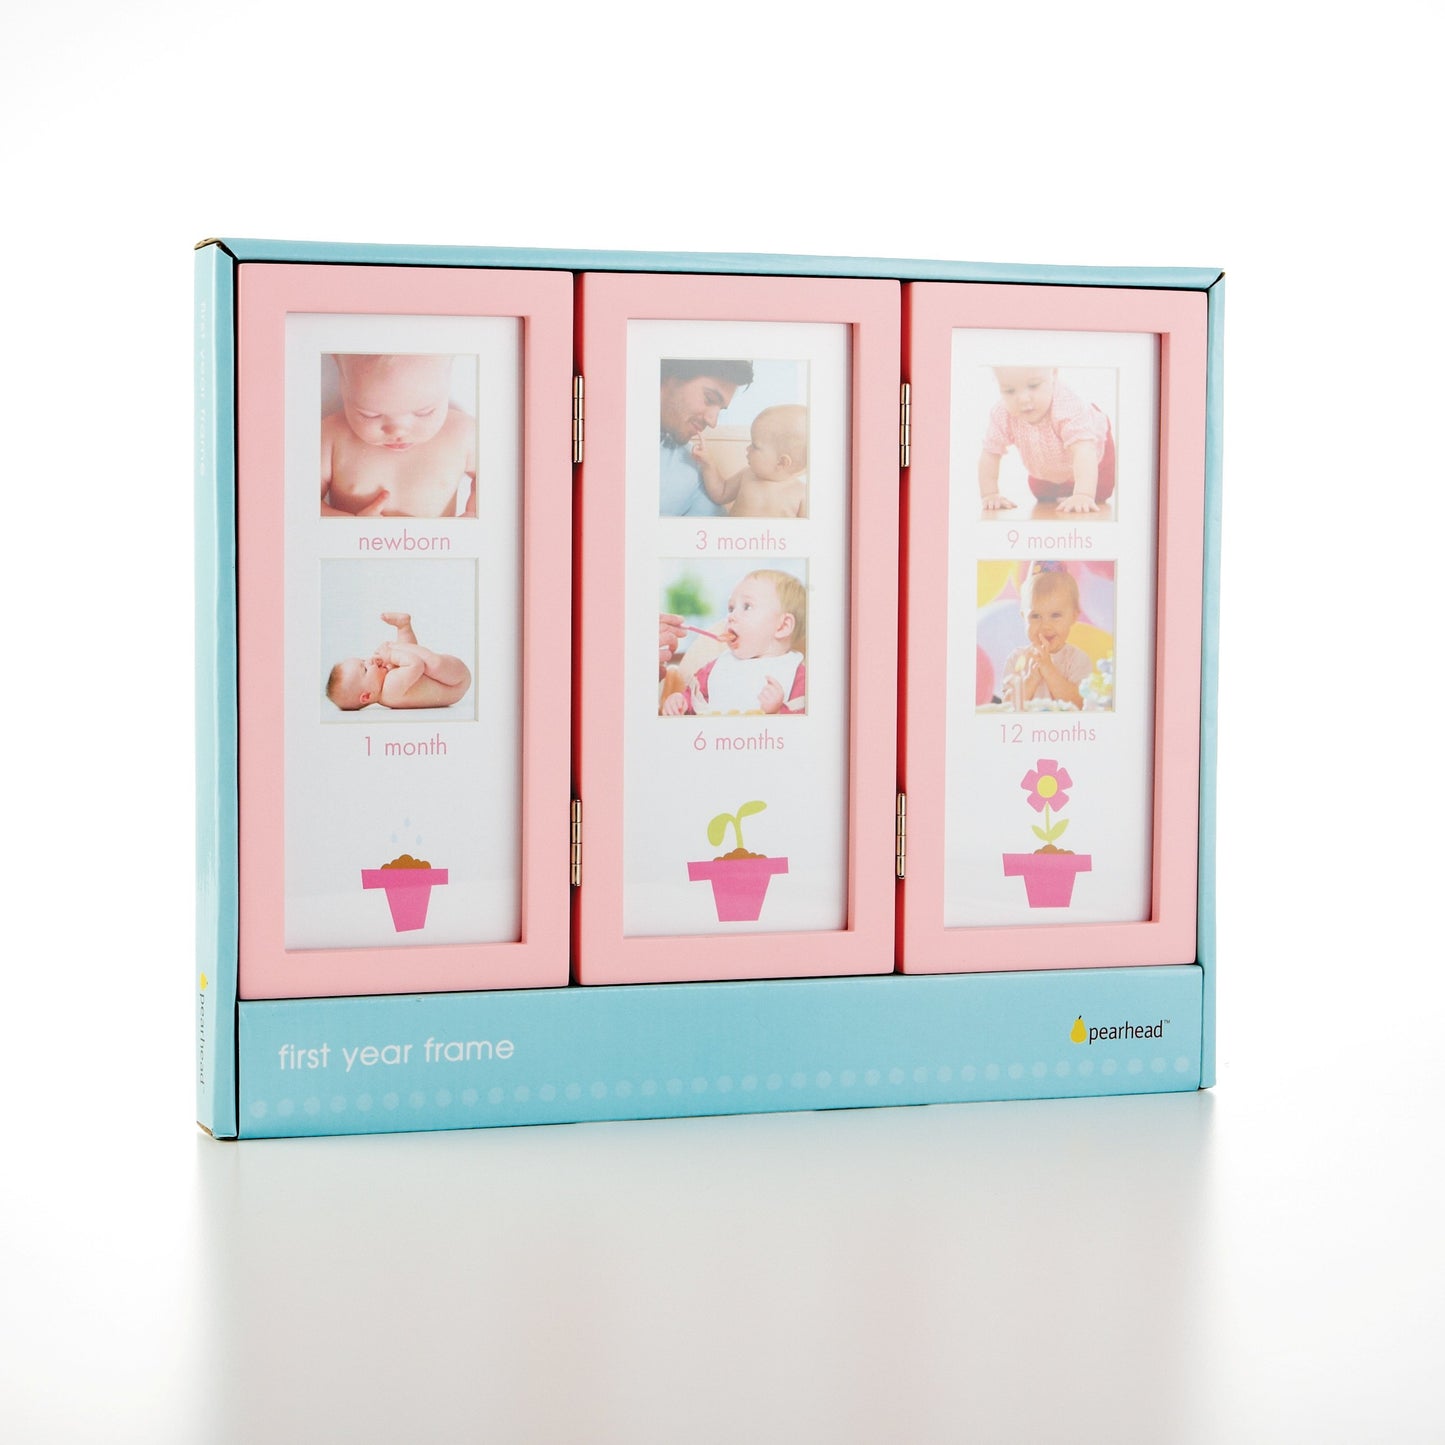 Babys erstes Jahr Miniaturbilderrahmen rosa